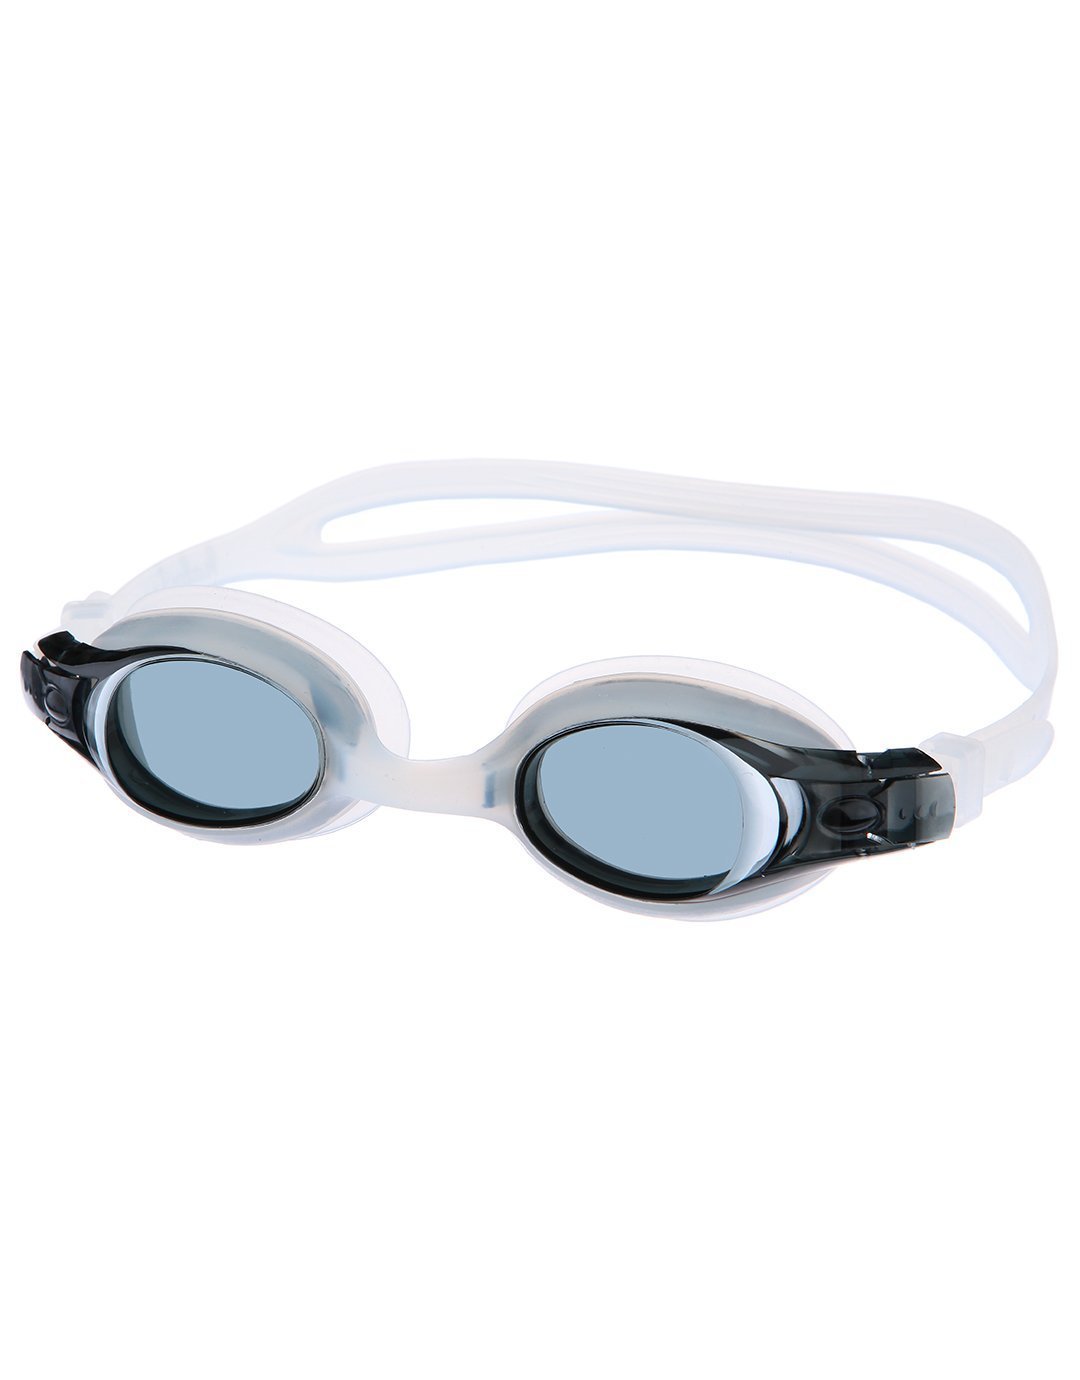 Halocline Streamline Plus Swimming Goggles